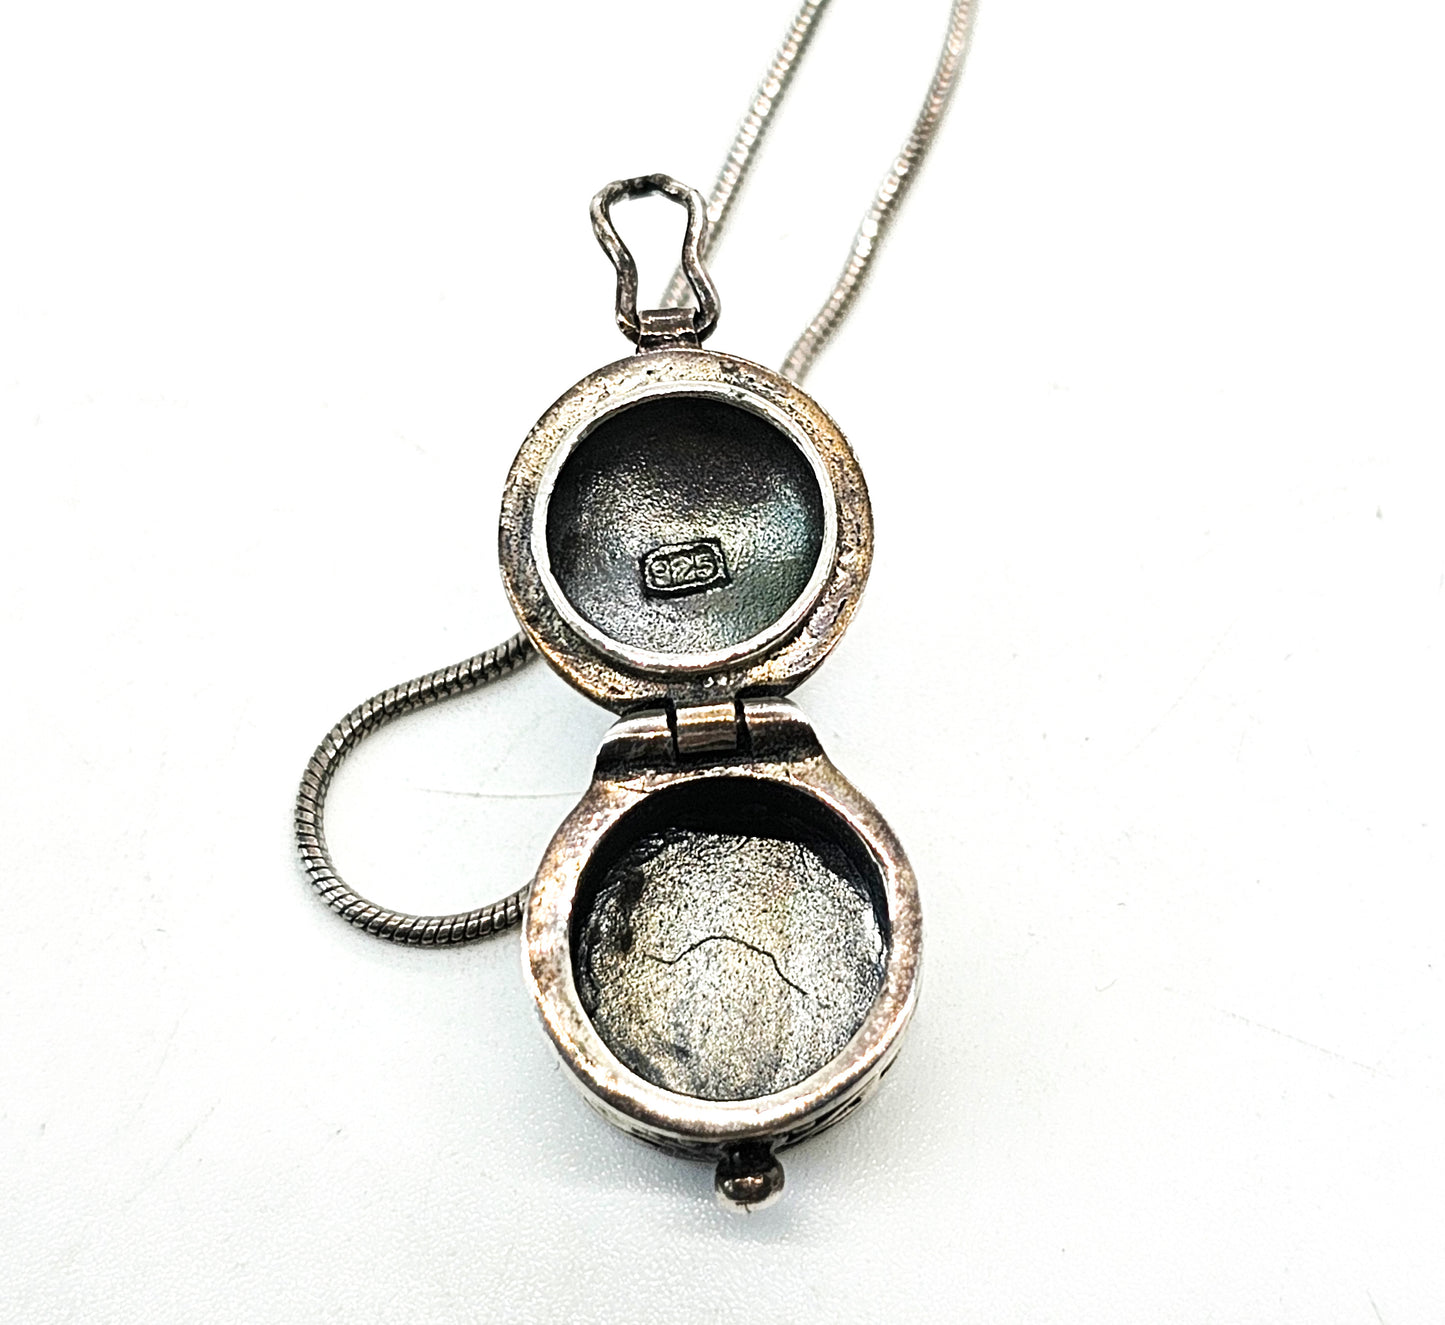 Prayer box small opening poison keepsake sterling silver pendant necklace